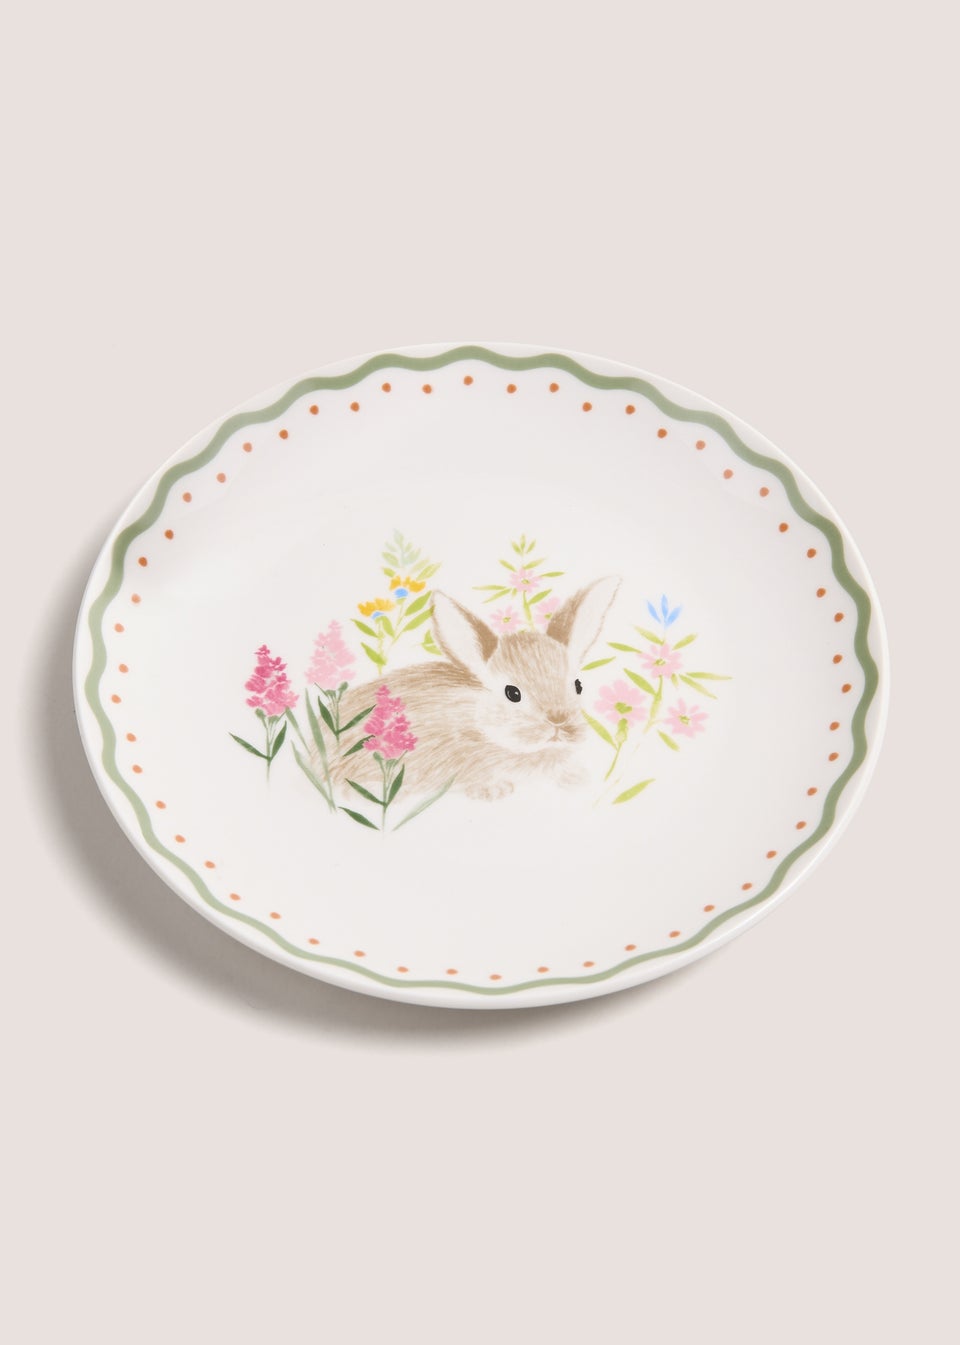 Rabbit side plate (19cm)